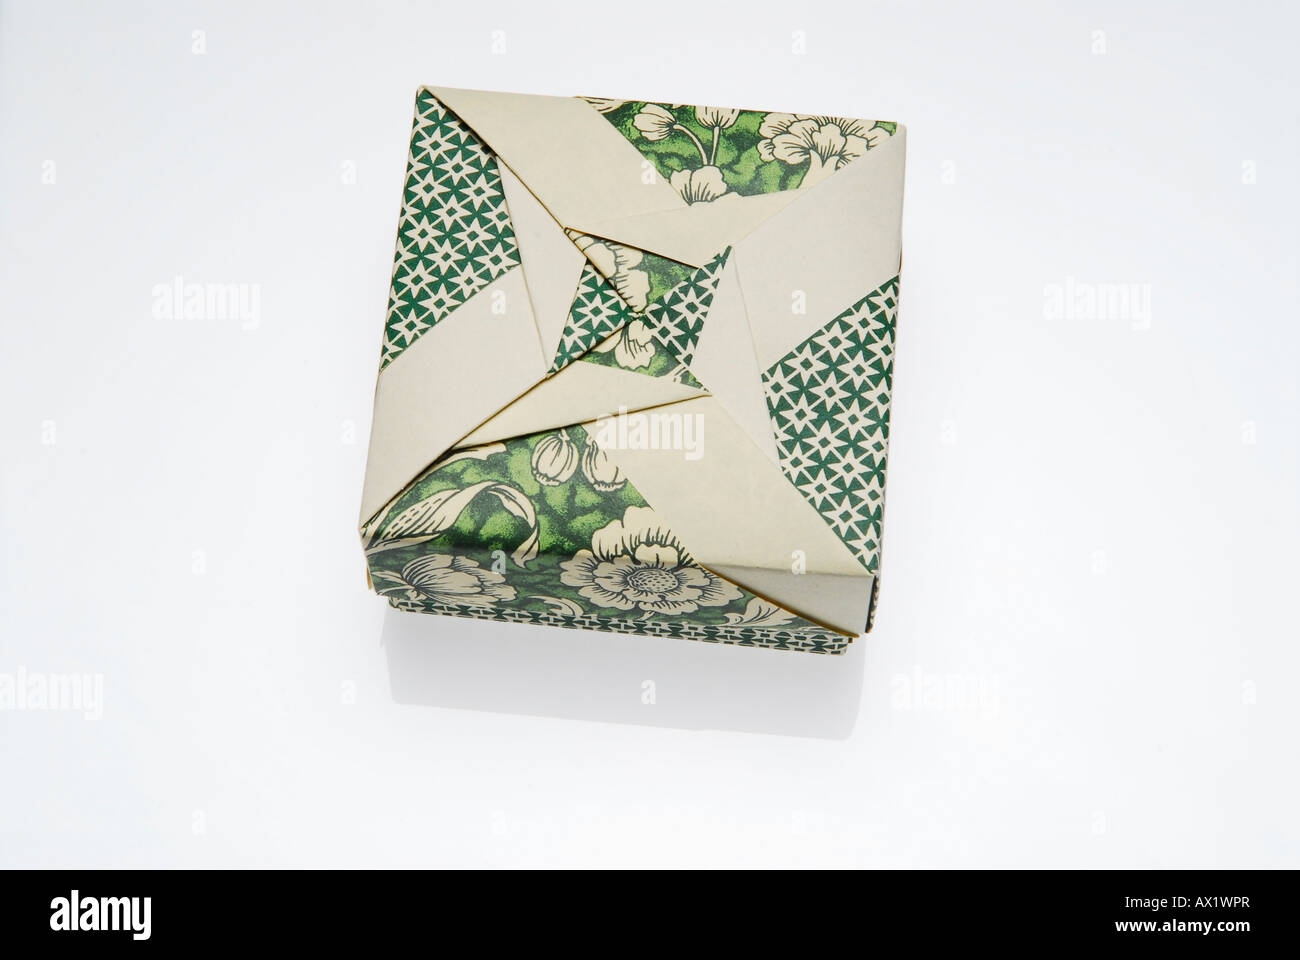 Origami box Stock Photo